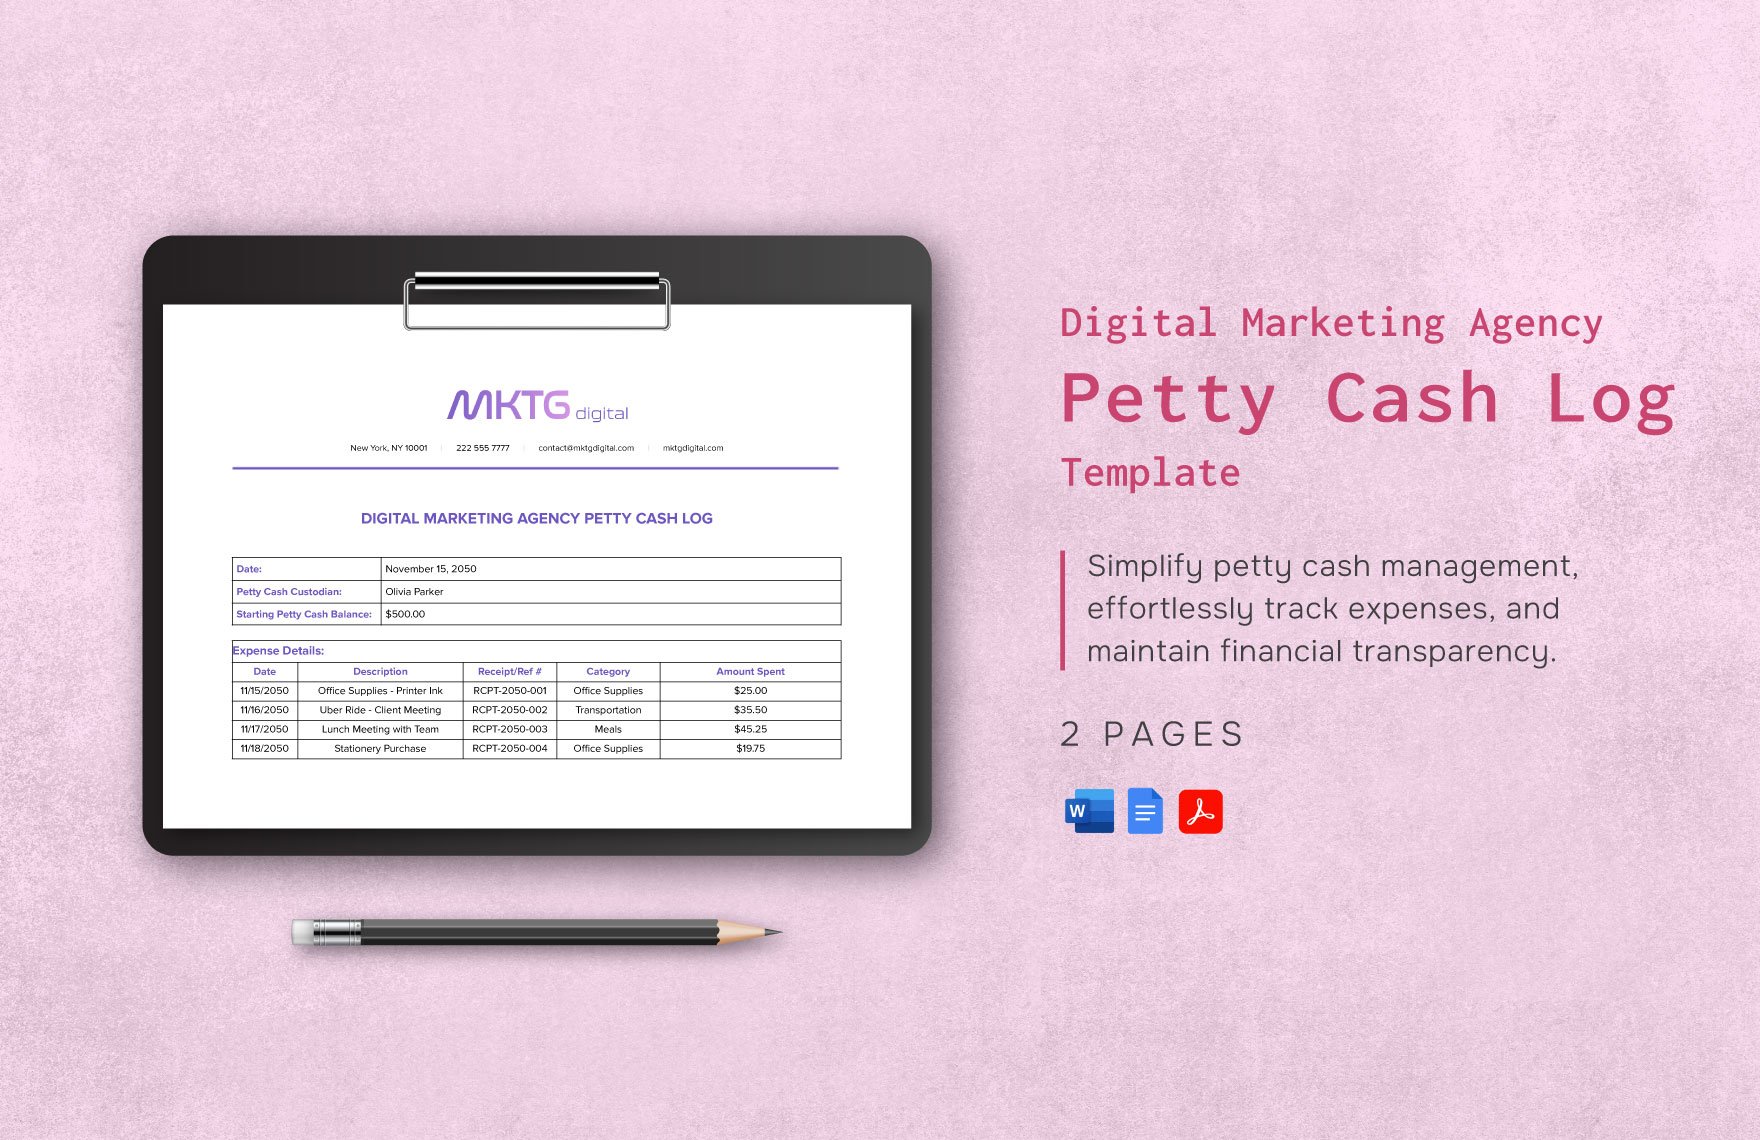 Digital Marketing Agency Petty Cash Log Template